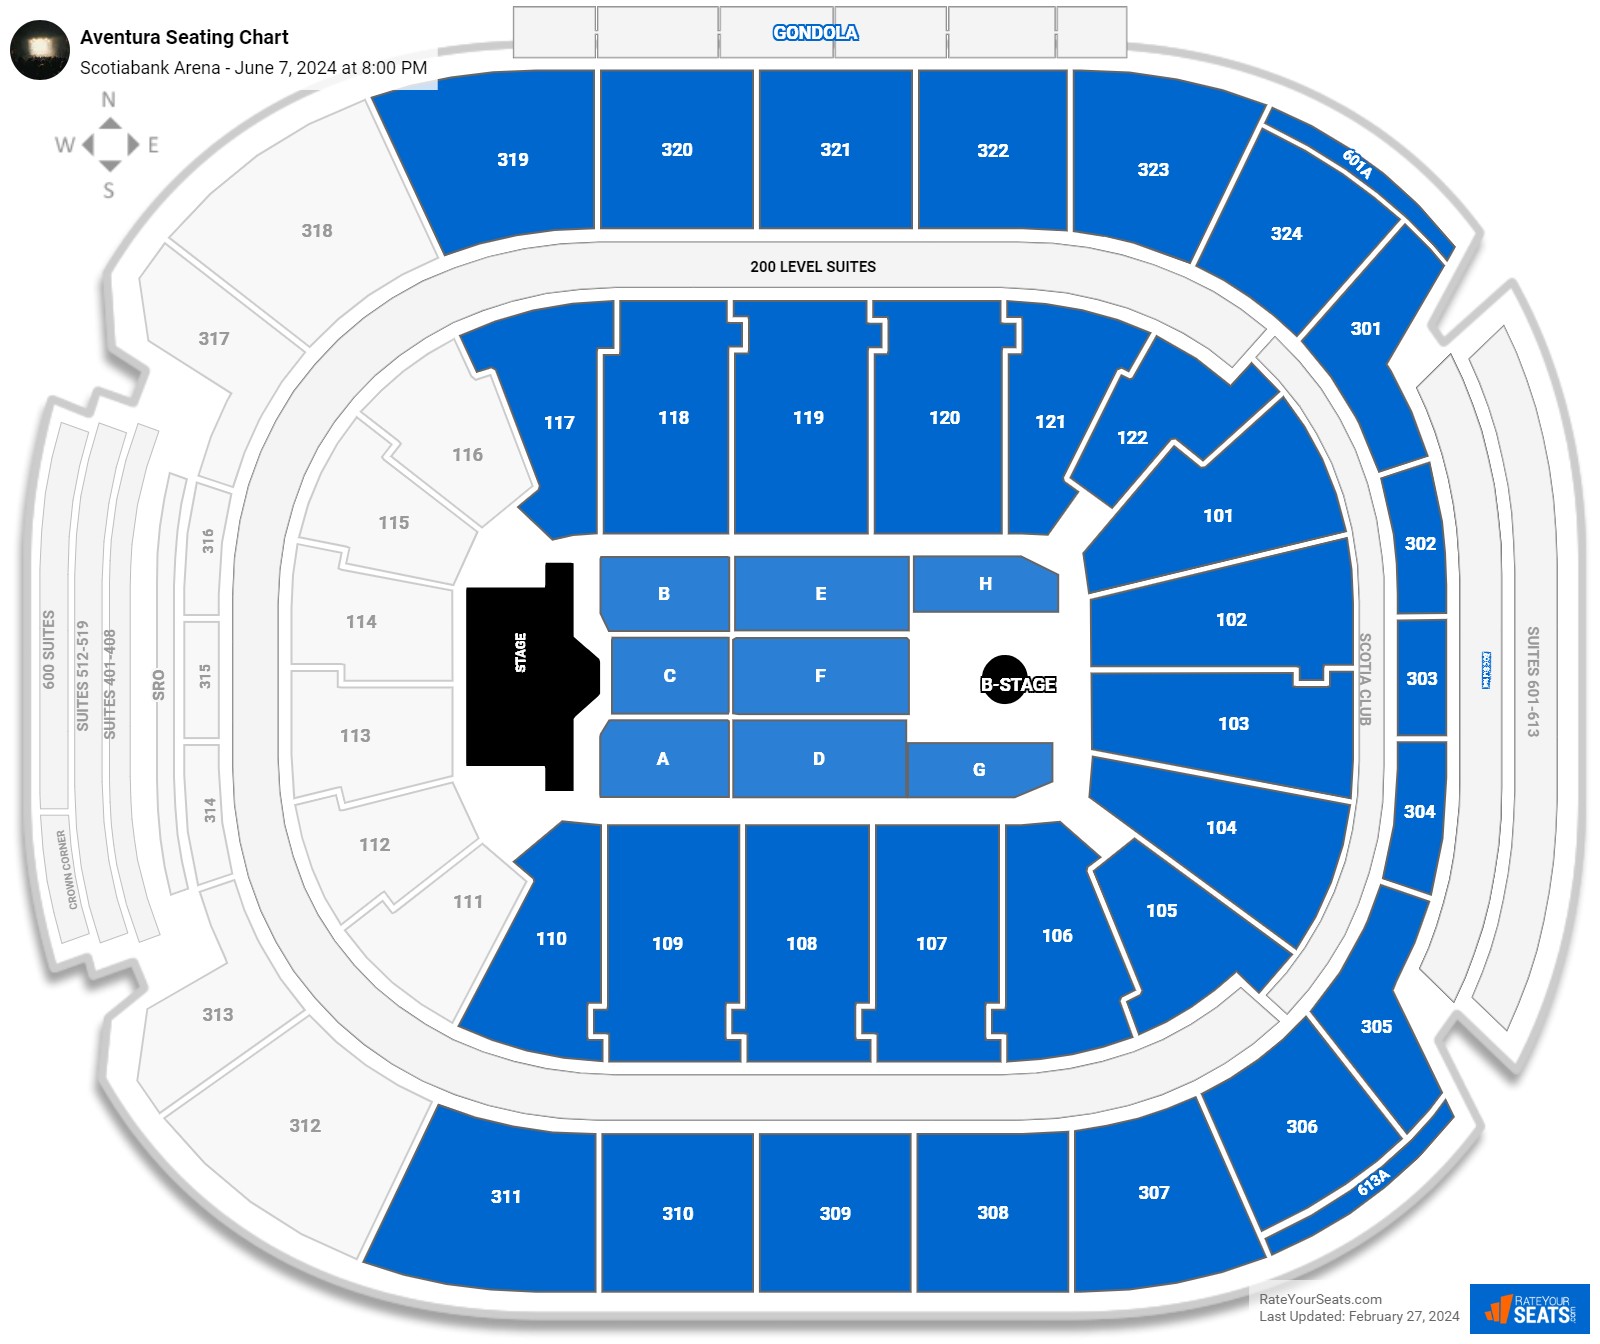 Aventura seating chart Scotiabank Arena